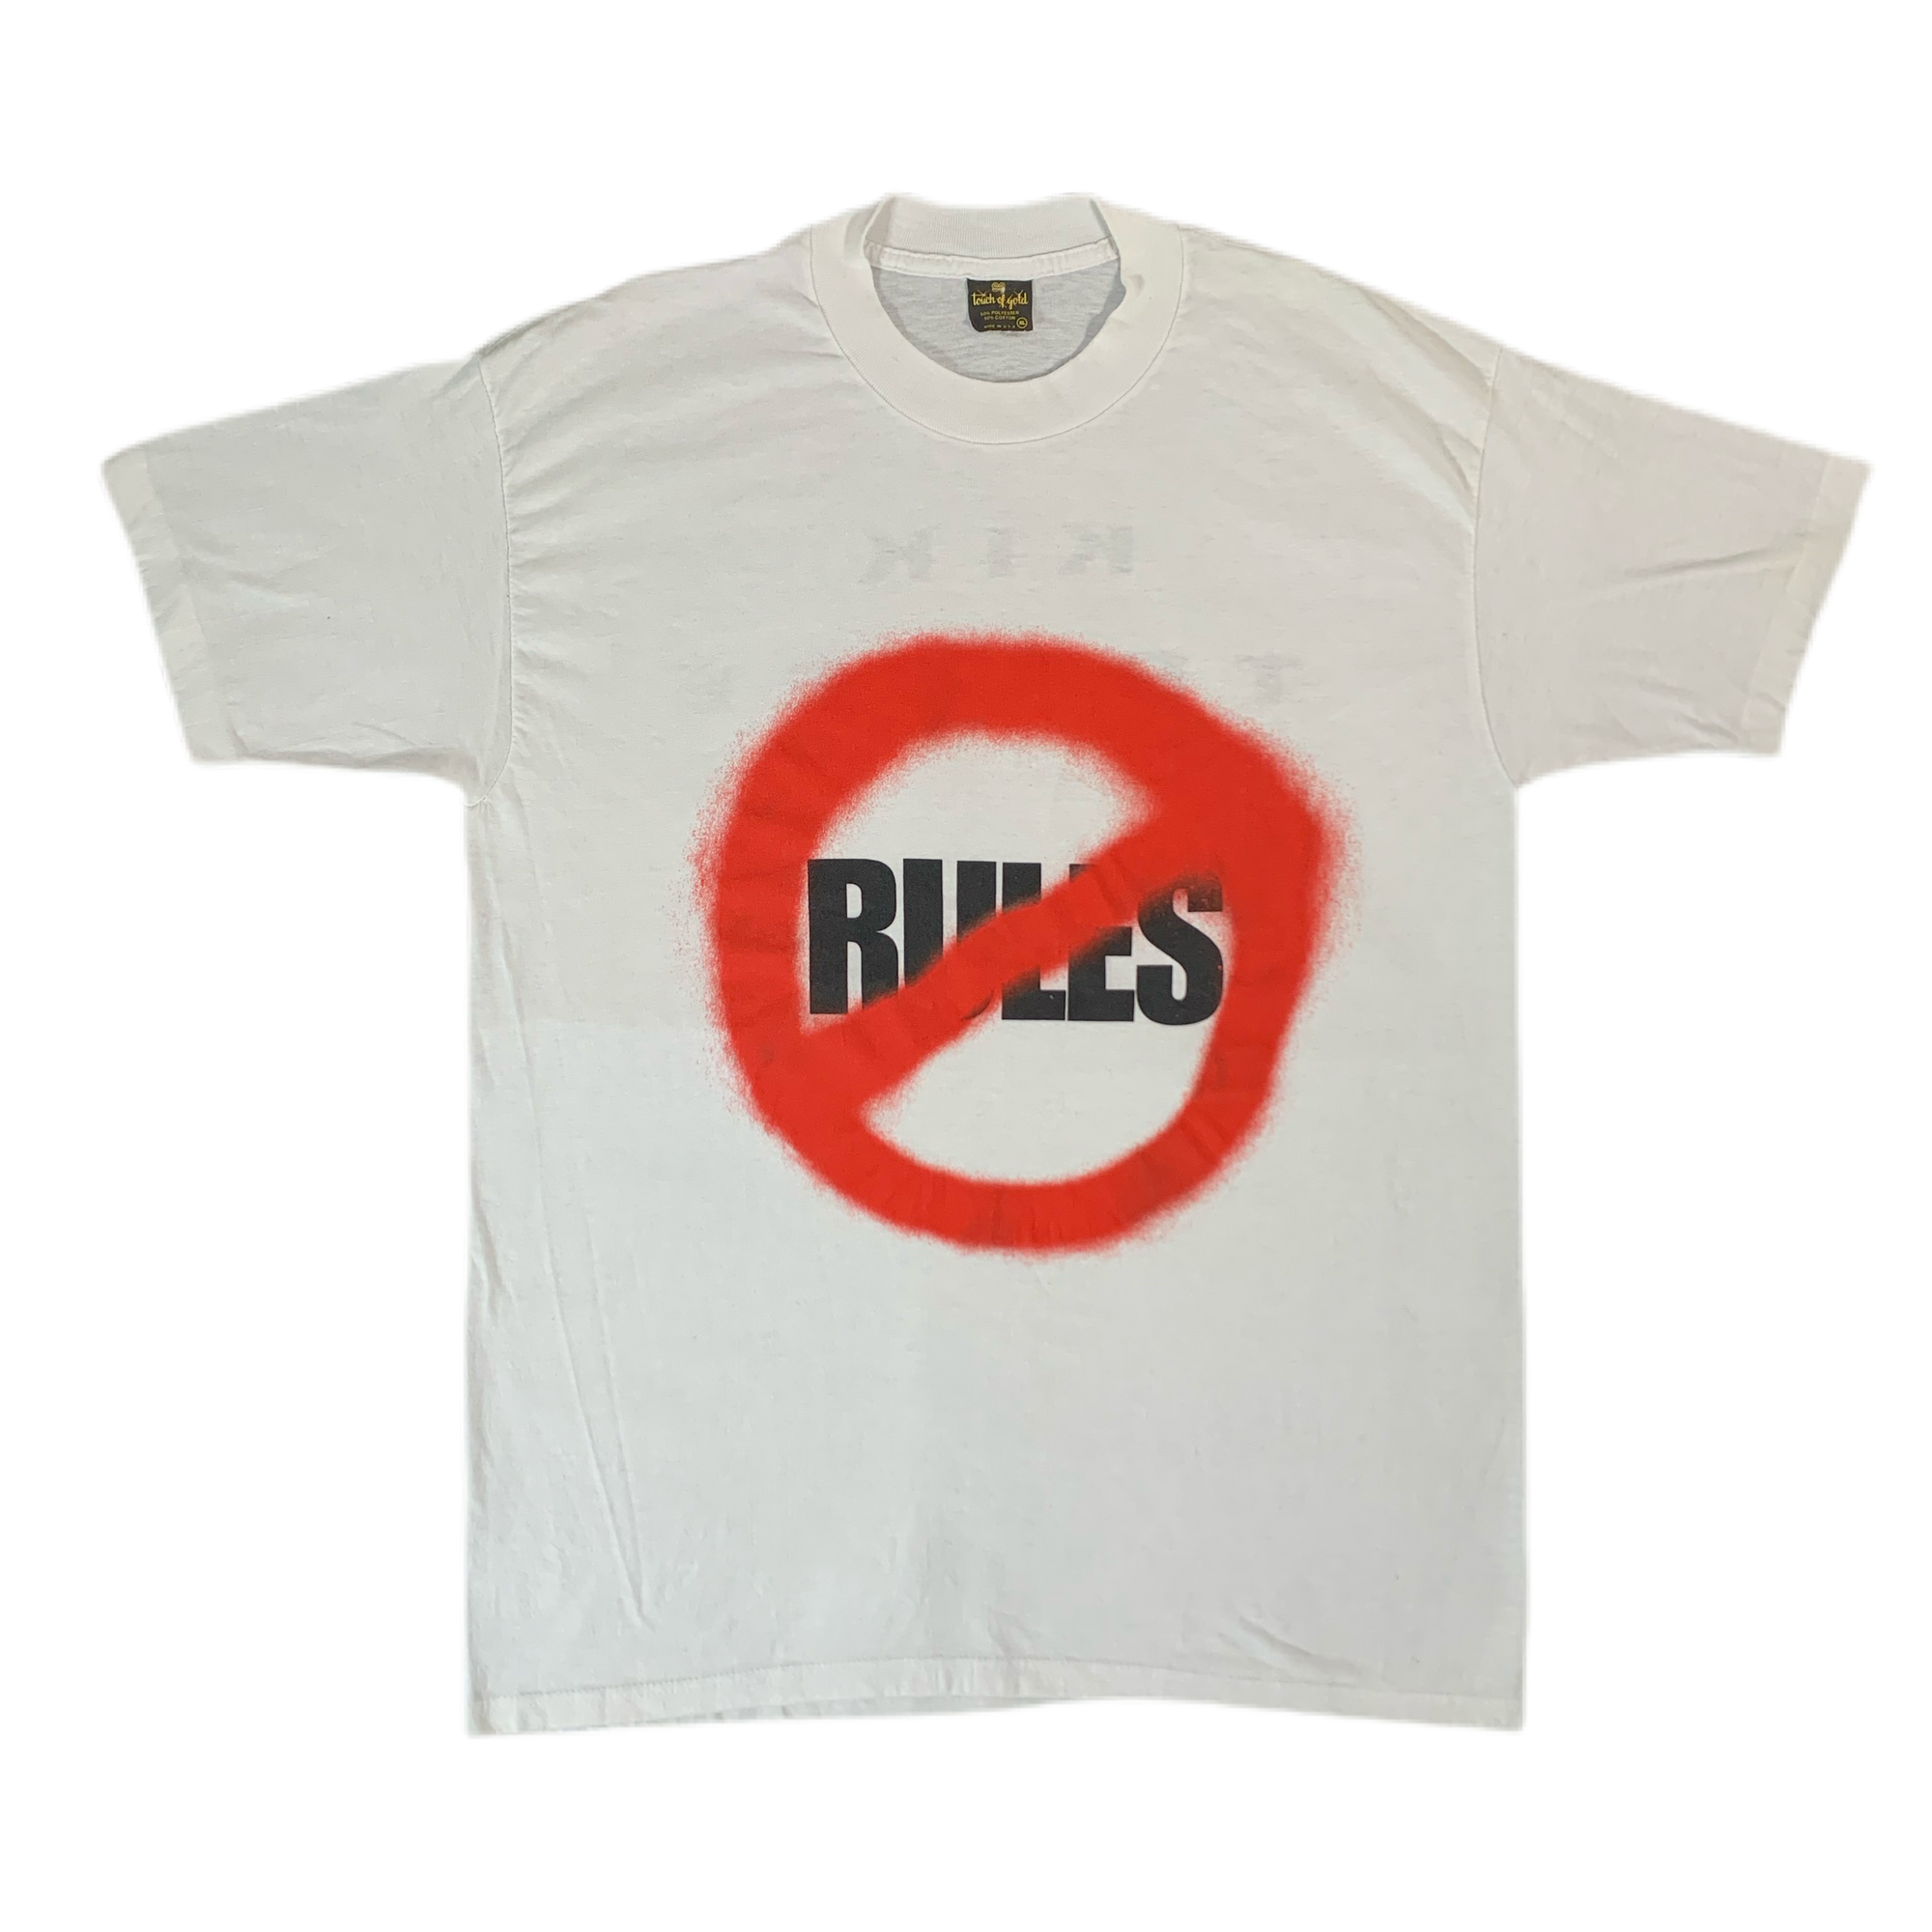 Vintage Kik Tracee “No Rules” T-Shirt - jointcustodydc